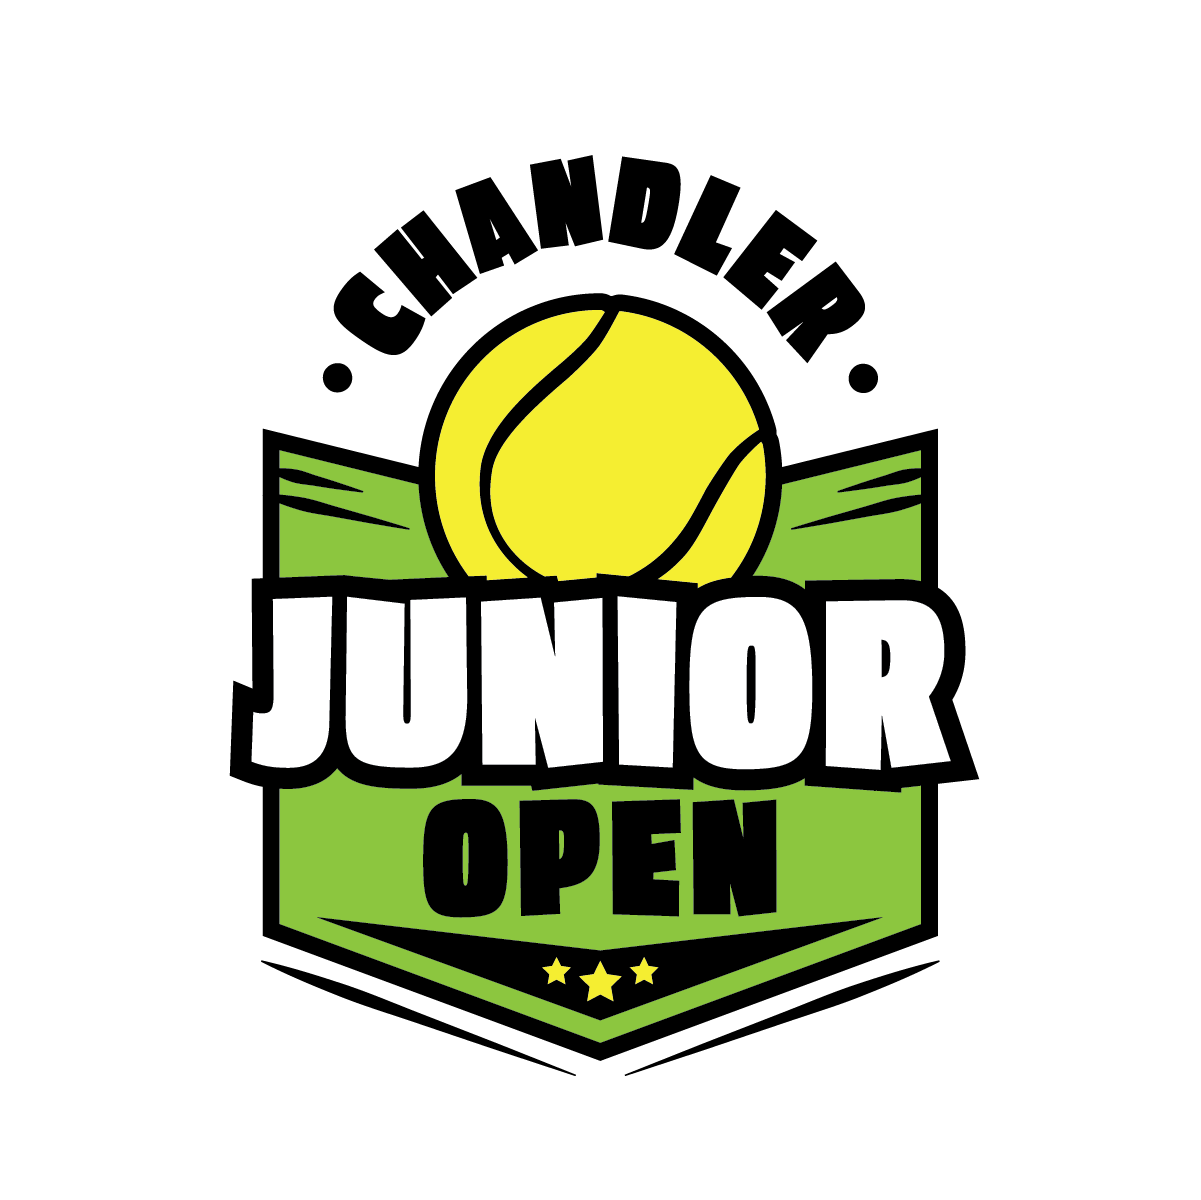 chandler junior open logo